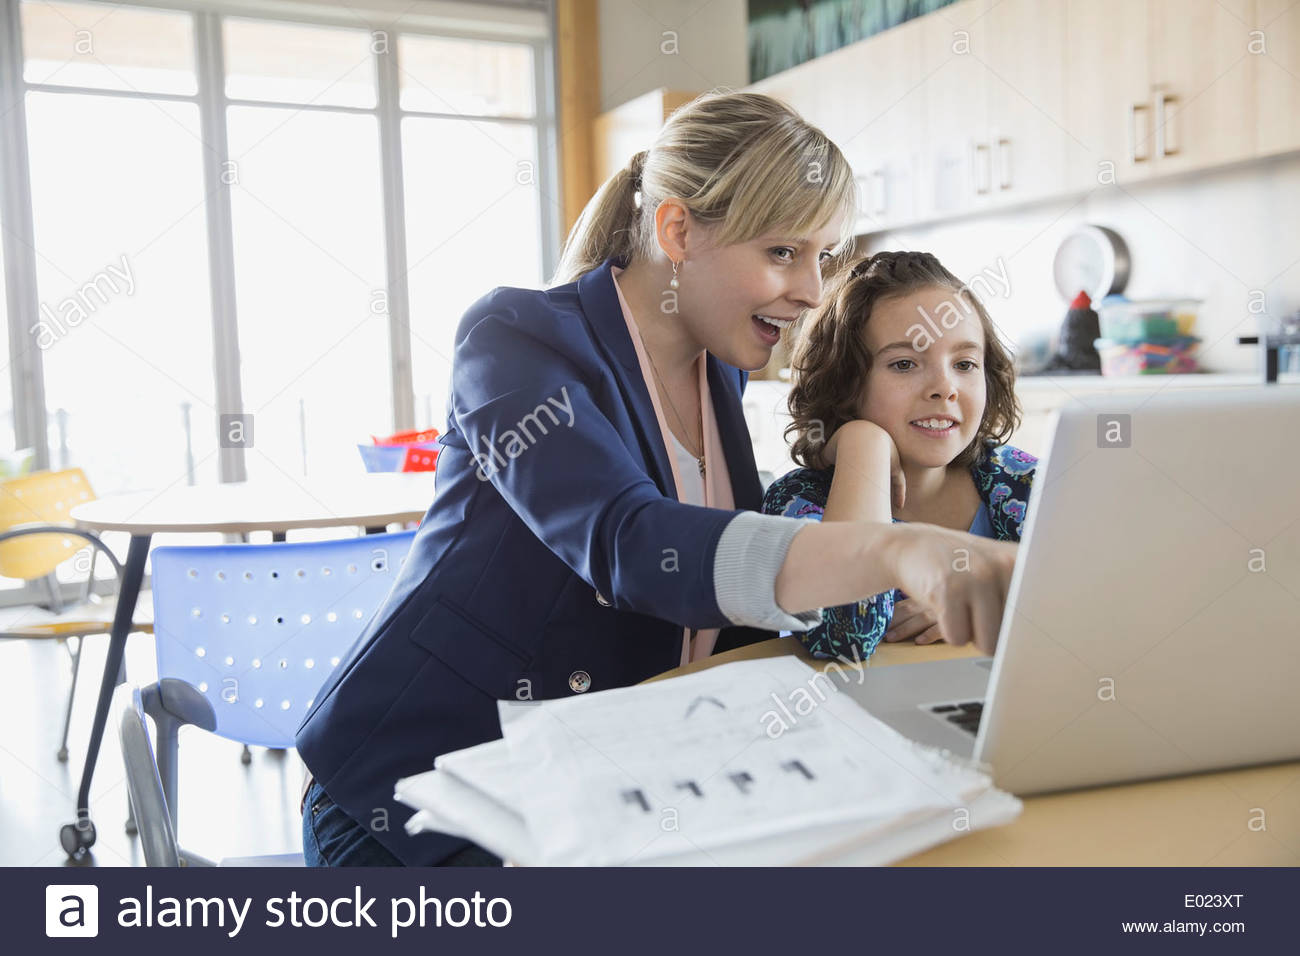 School girl and teacher using laptop in classroom Stock Photo